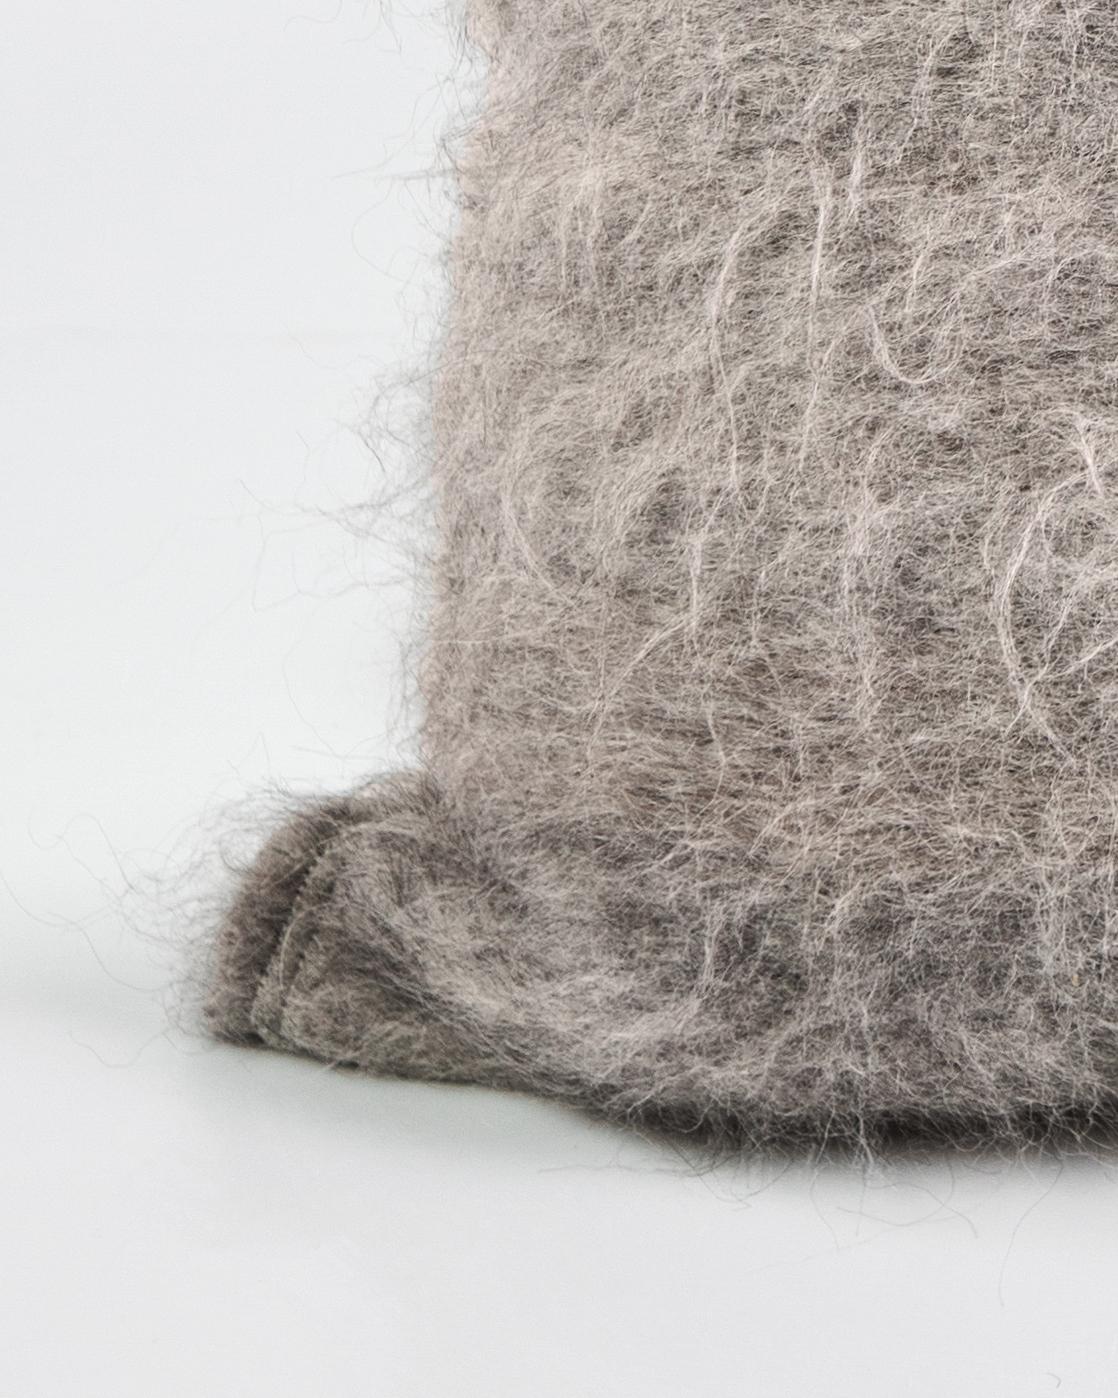 Organic Modern Awanay Handwoven Fair Trade Organic Llama Wool Pillow in Light Gray, in Stock For Sale